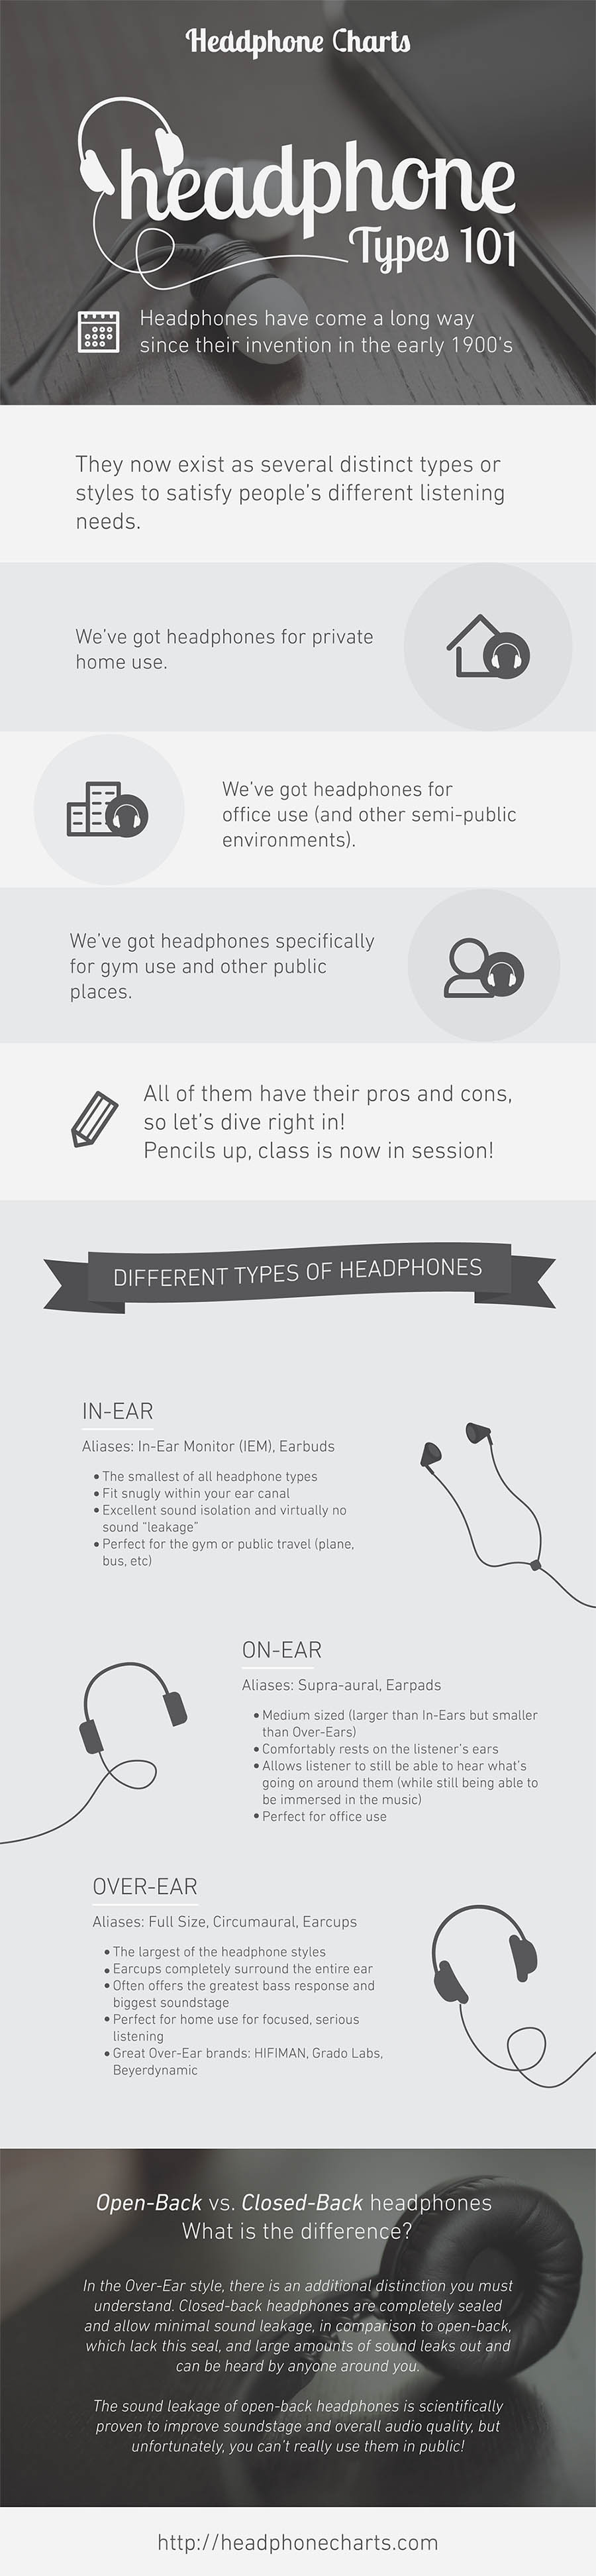 Different types of Headphones - Infographic